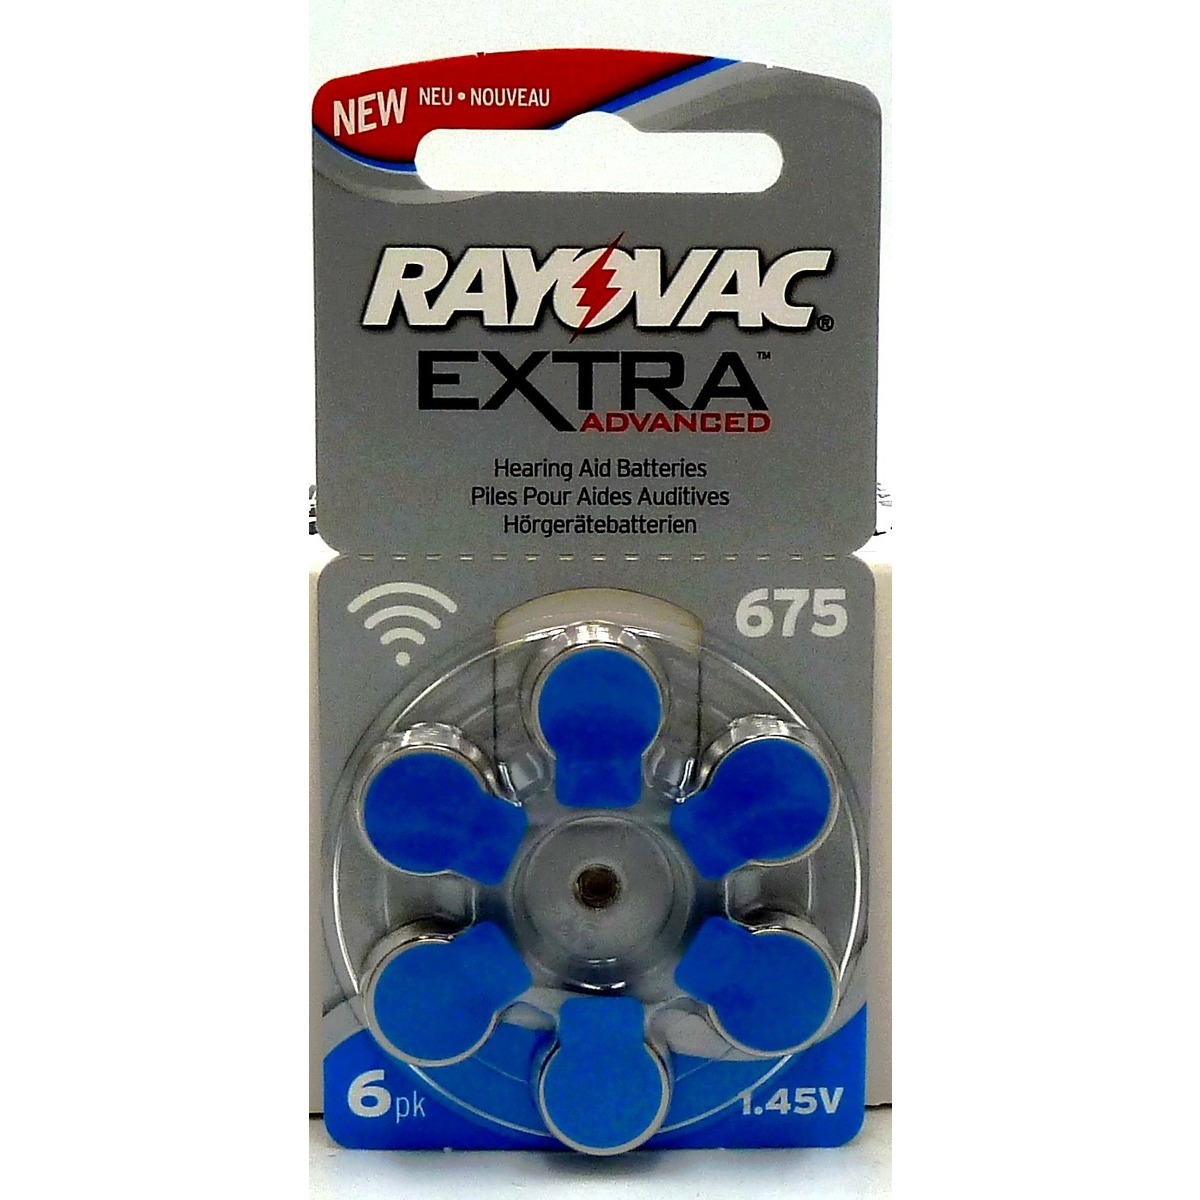 1 plaquette Rayovac Extra Advanced 675